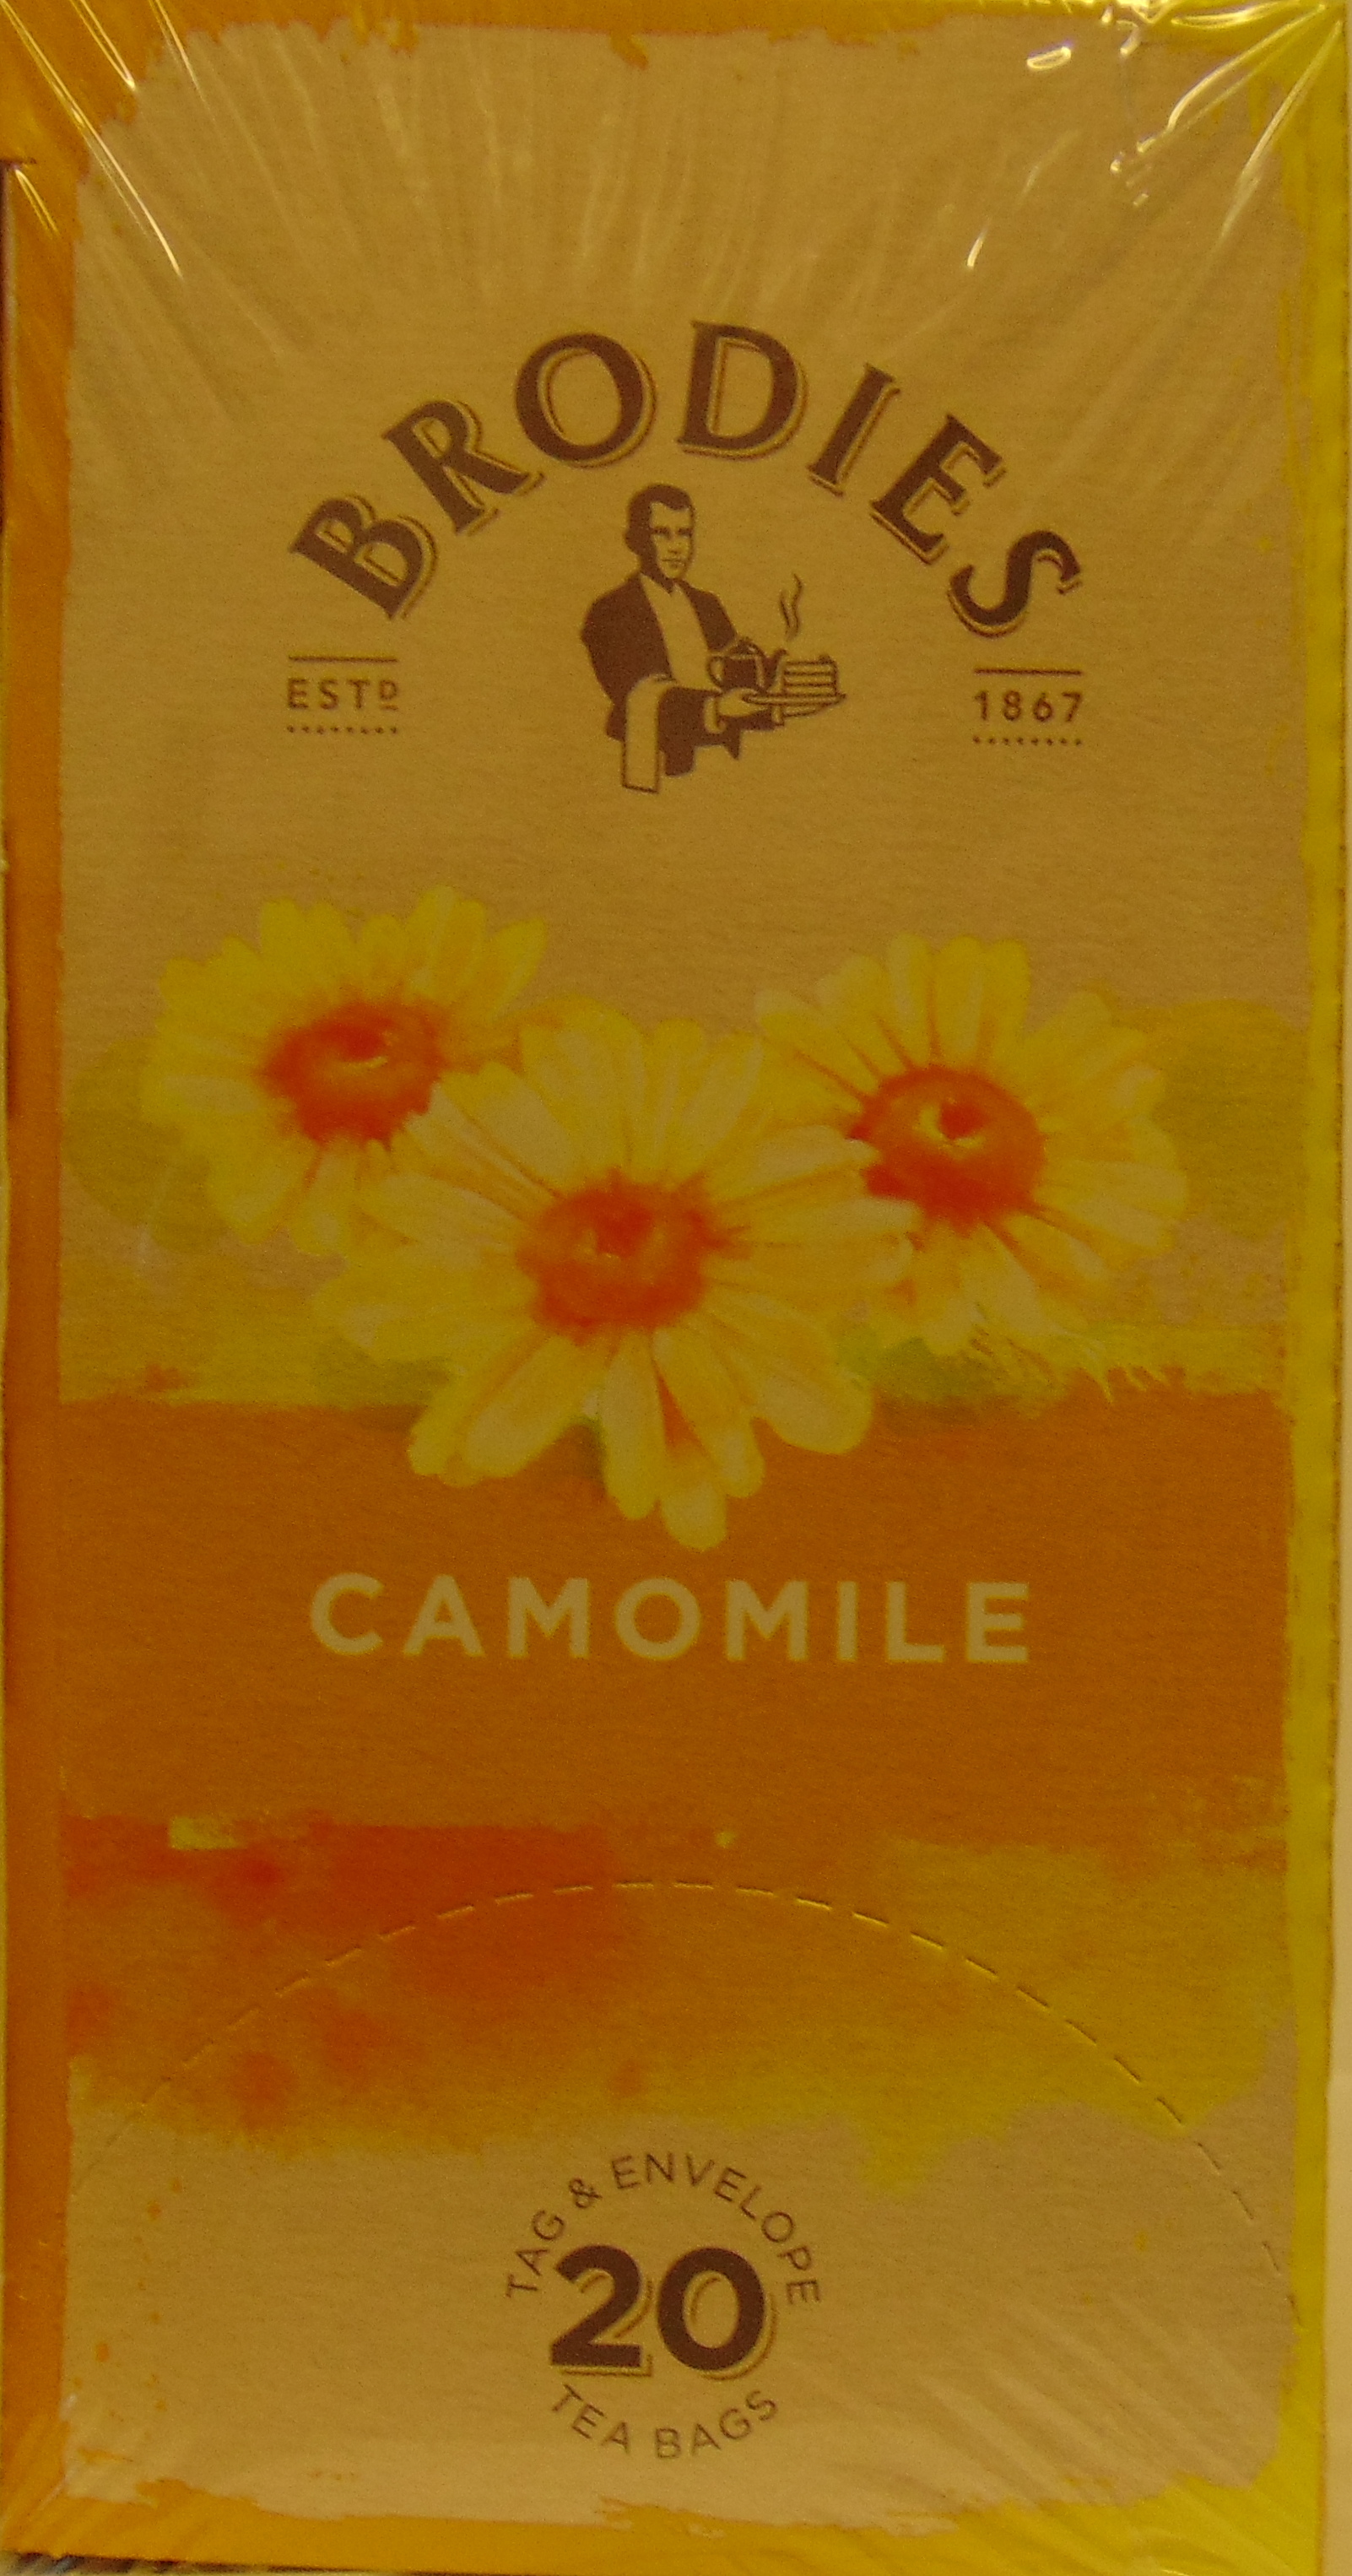 Brodie Melrose Camomile Tea. Tag and Envelope. 86g